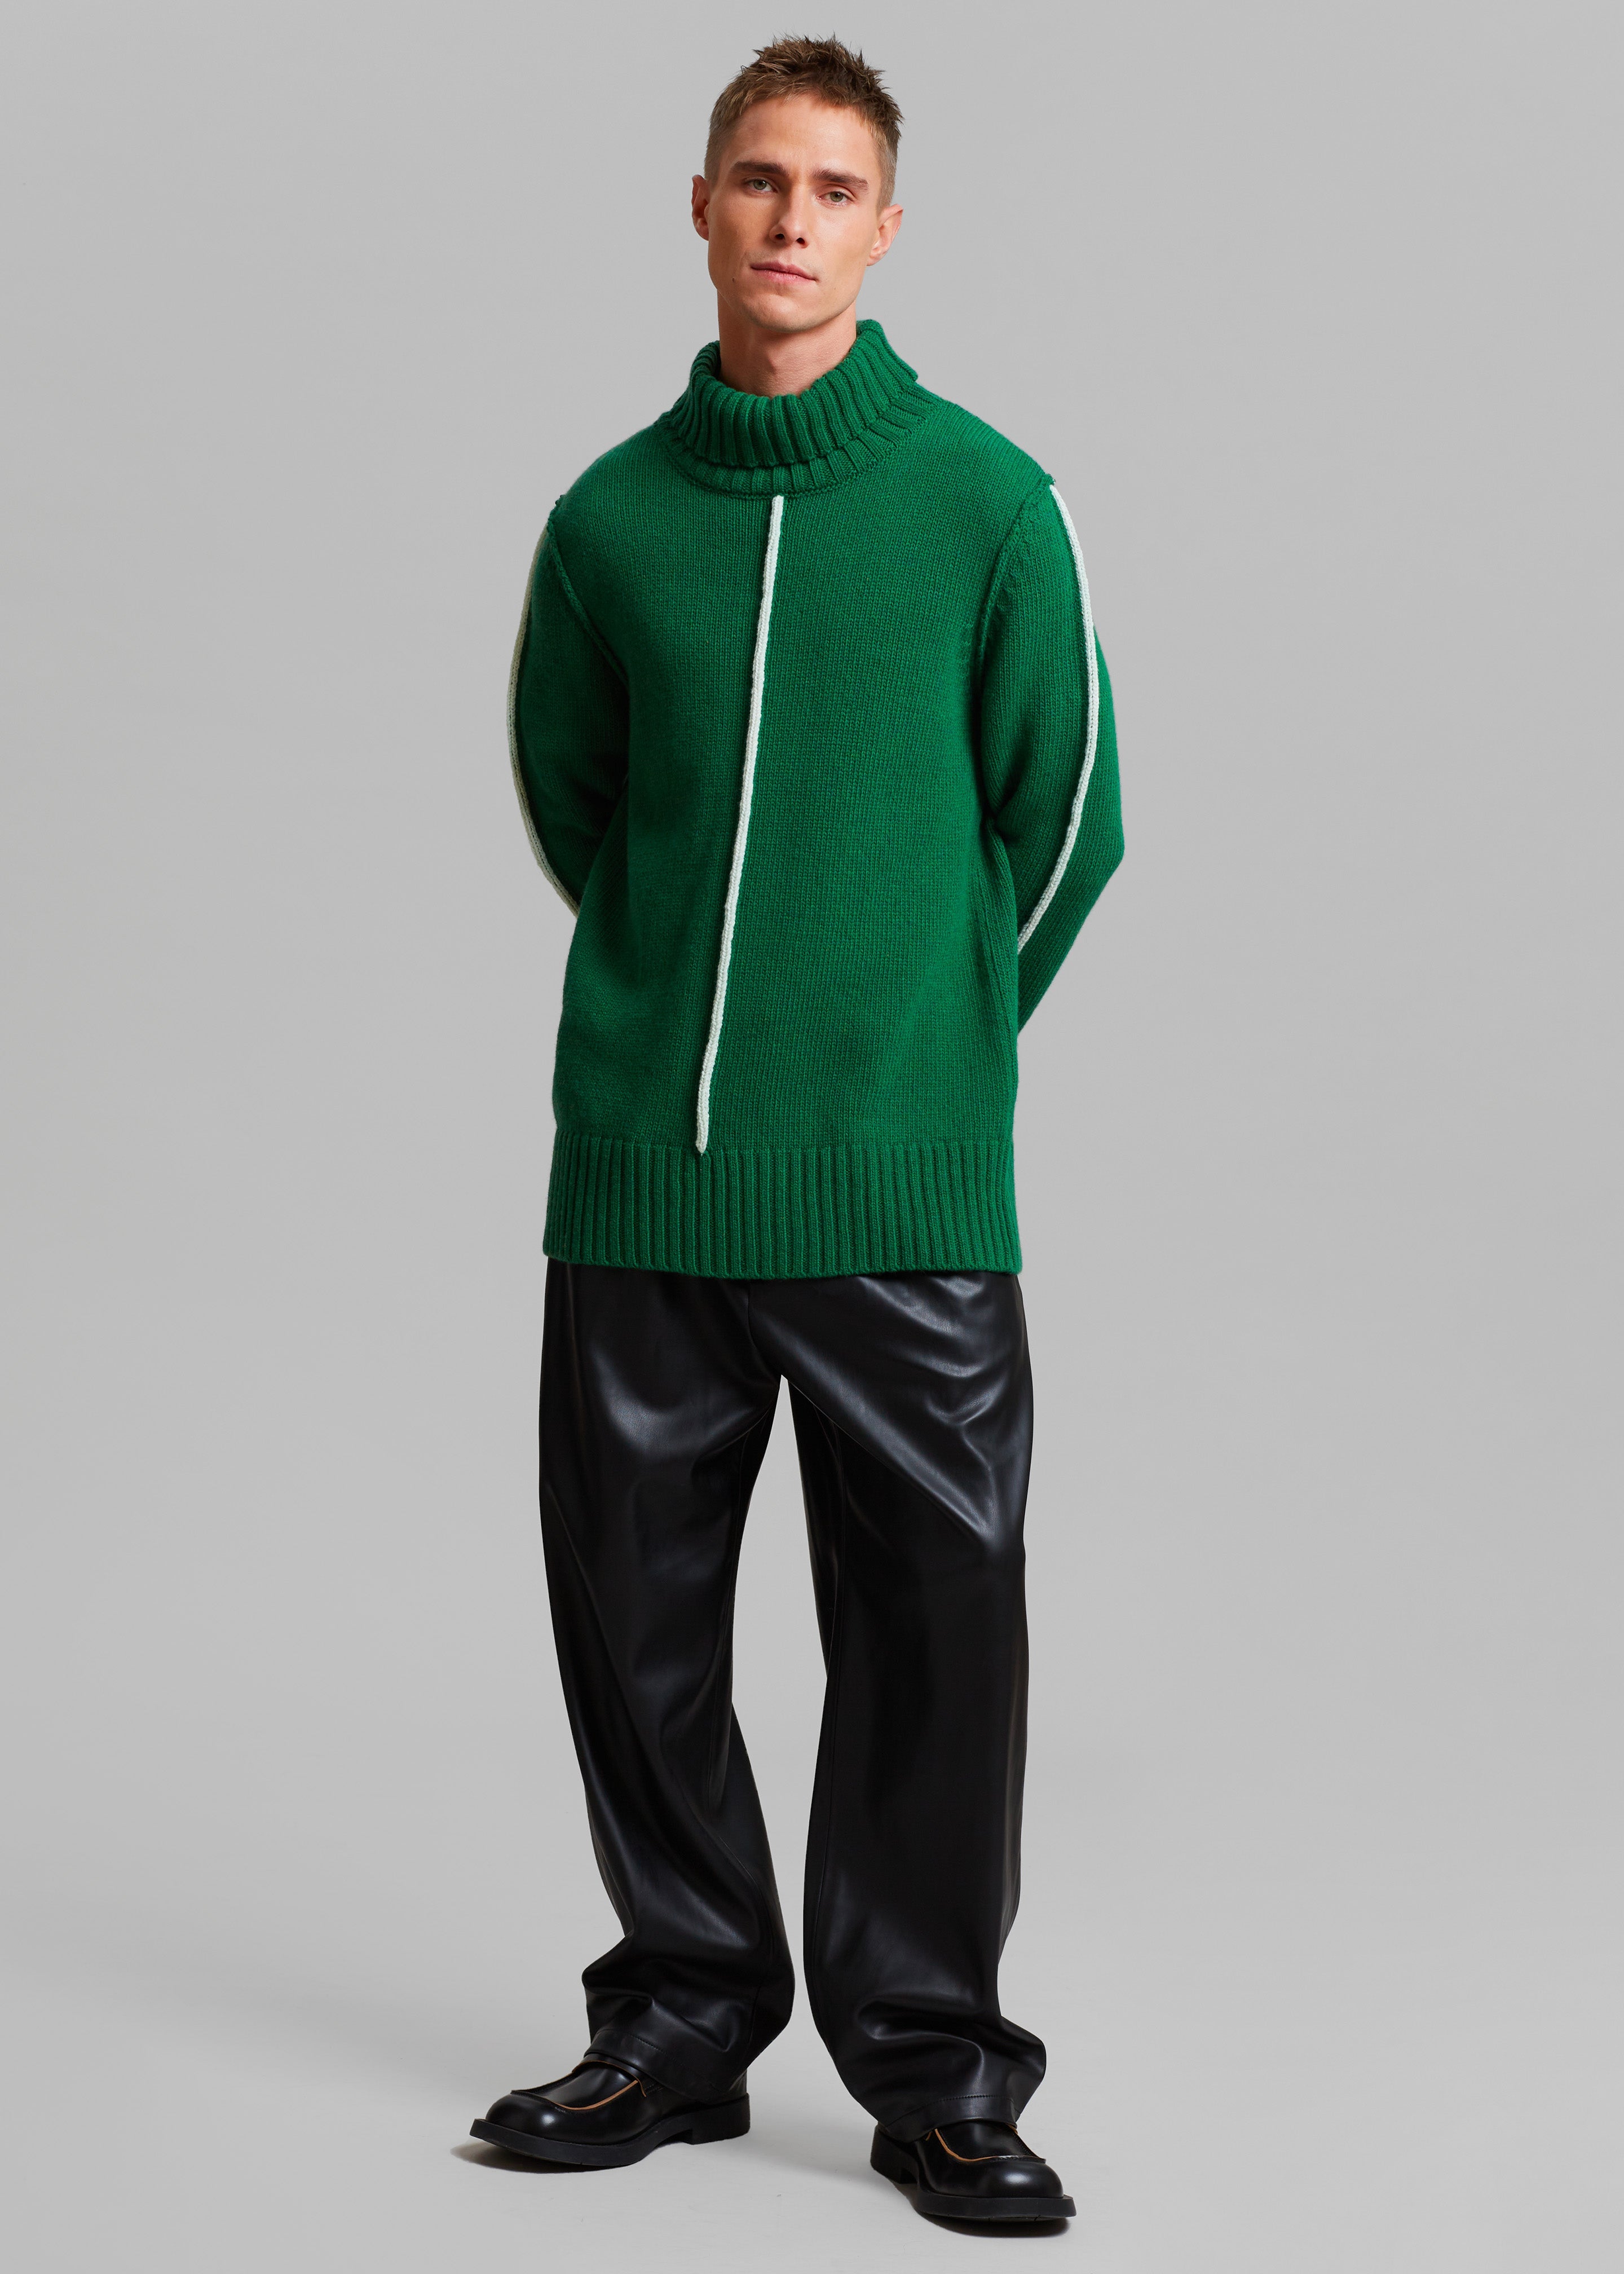 EGONLab Egonimati Turtleneck Sweater - Green Knit - 7